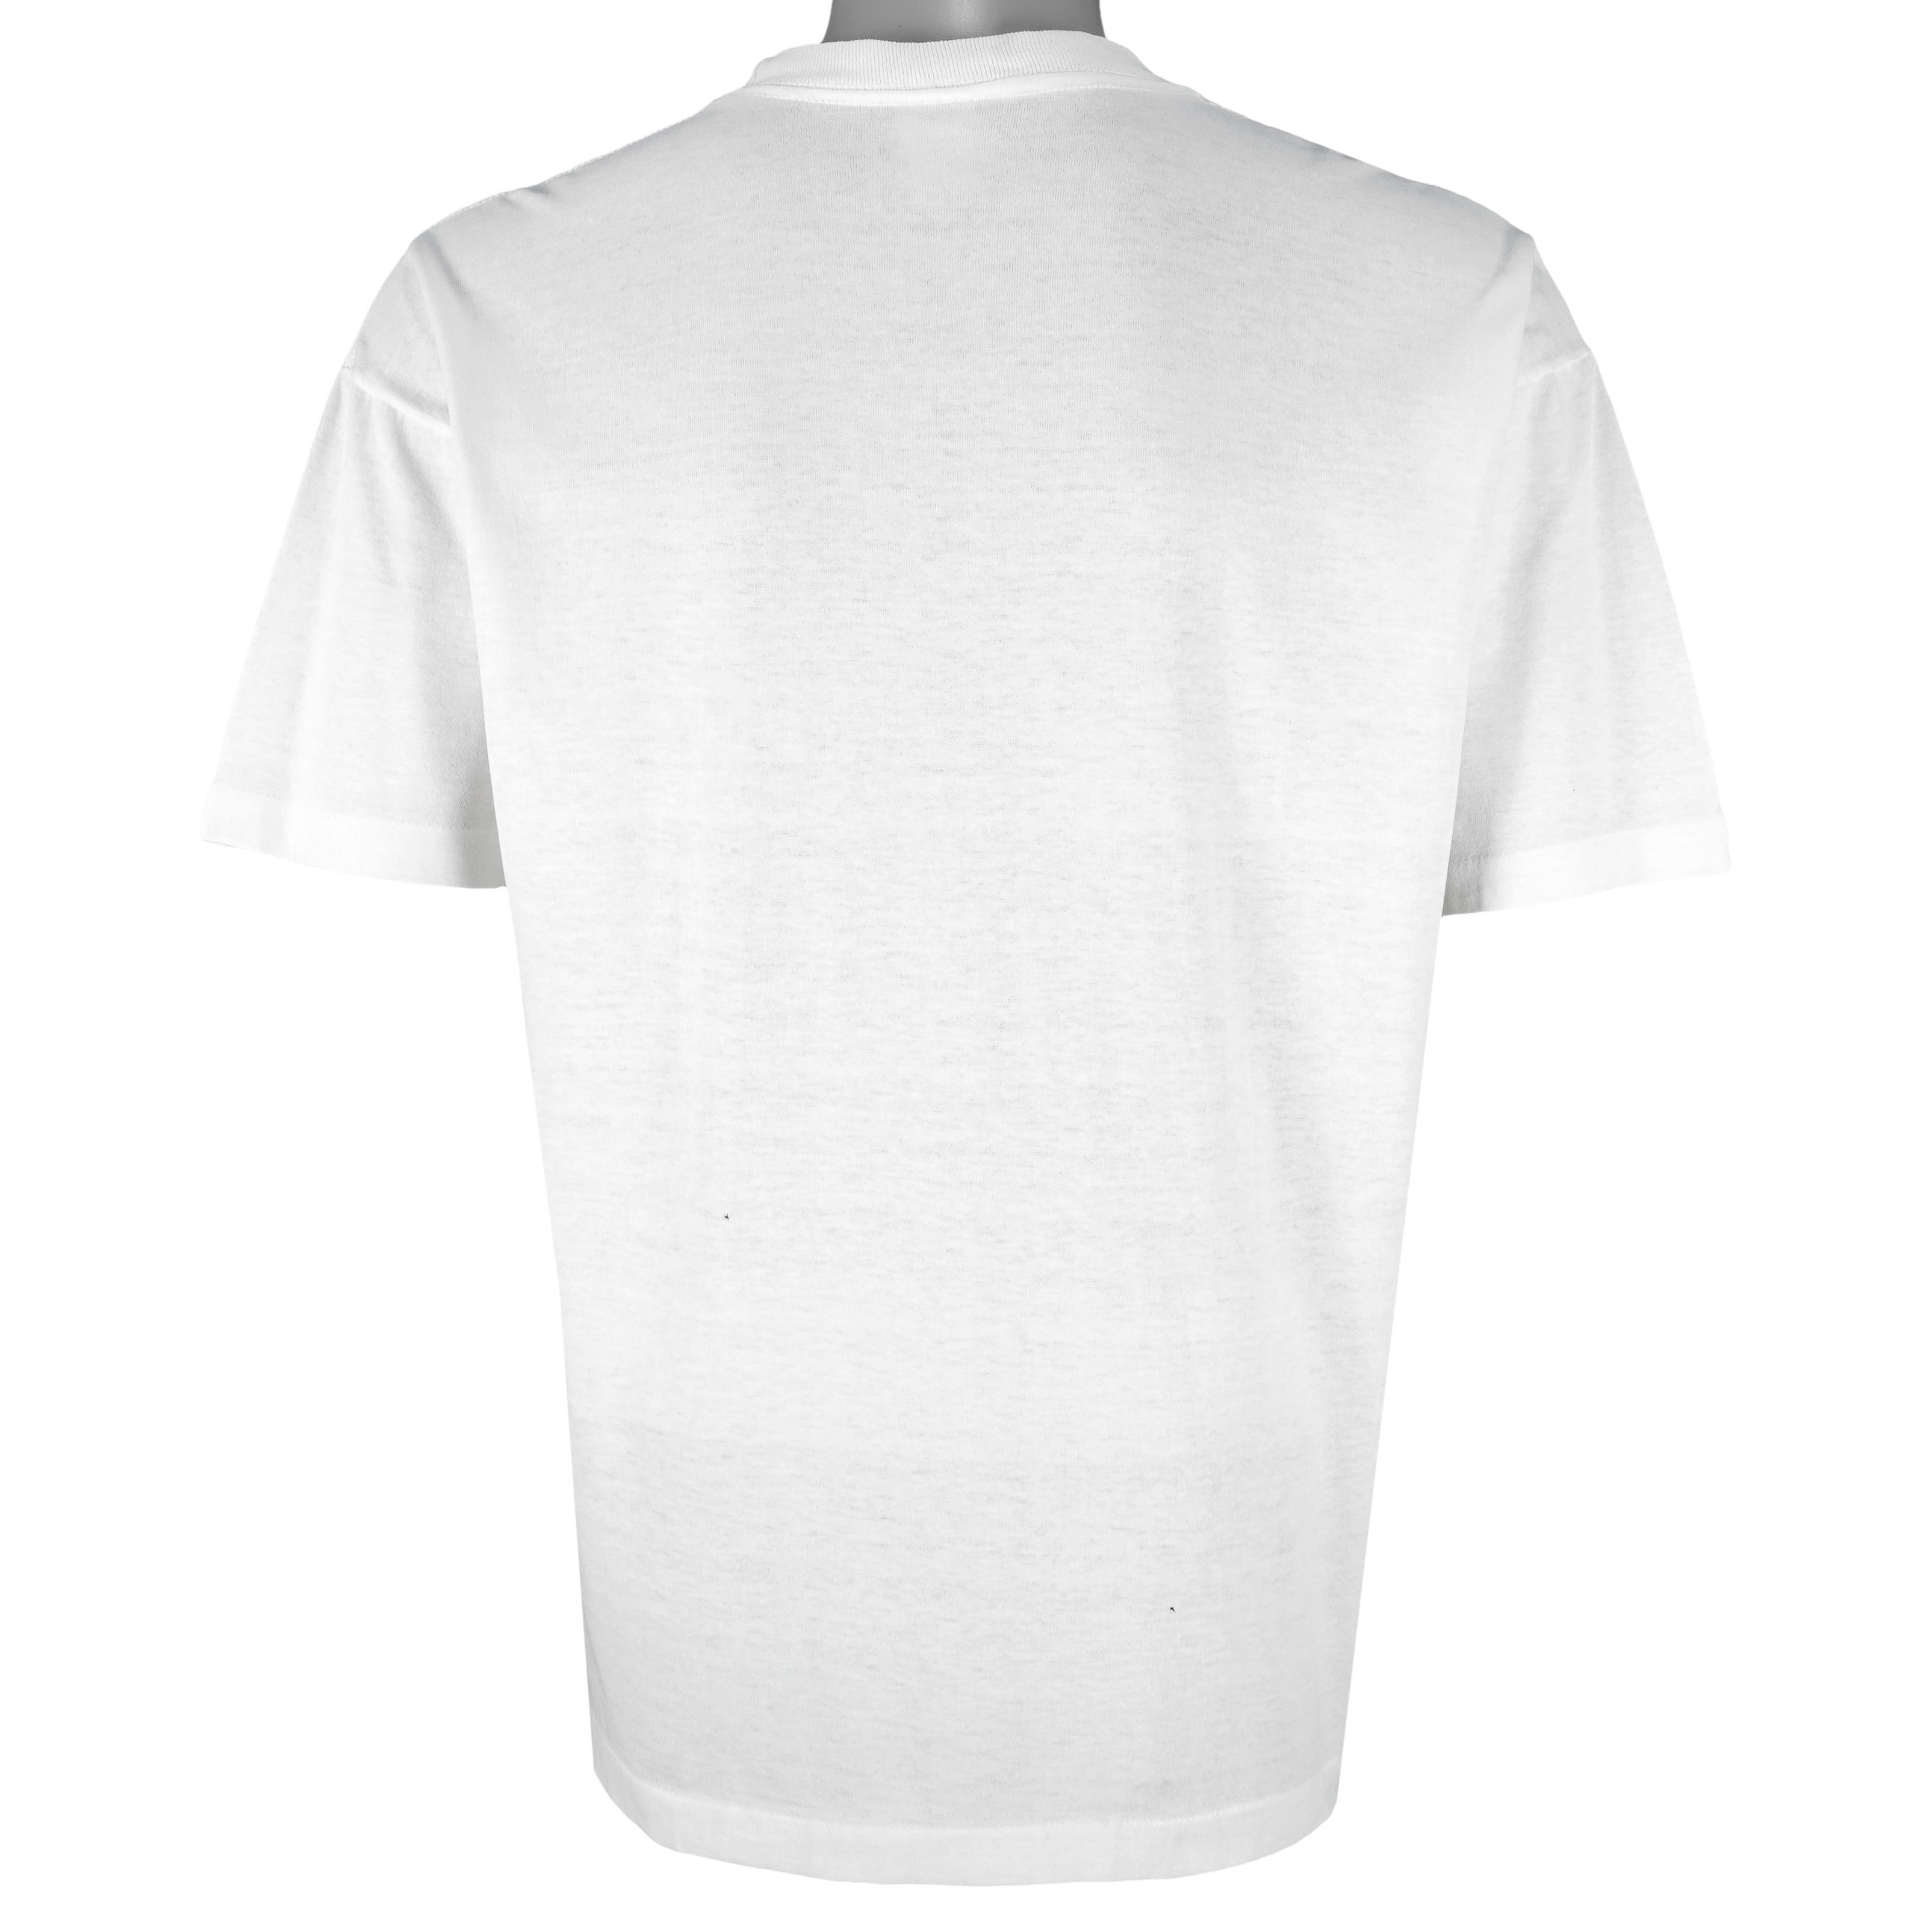 Oakland Athletics Baseball Champion shirt - Dalatshirt